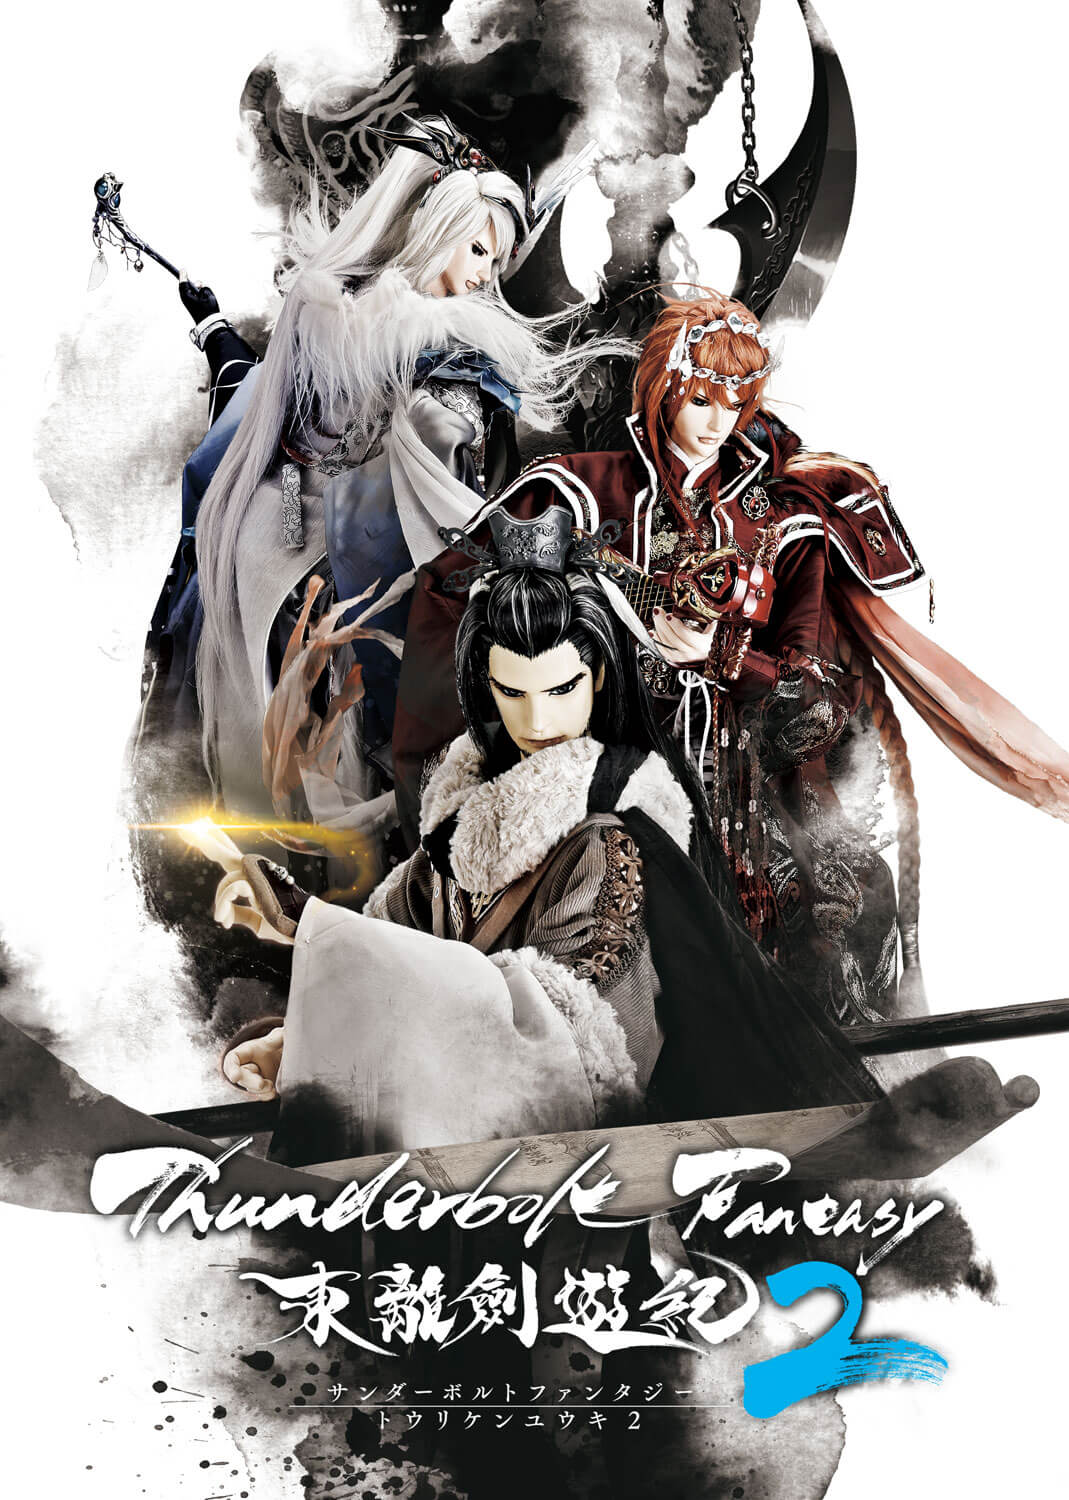 Thunderbolt Fantasy Season 2 Opening Ending Theme To Be Performed By Takanori Nishikawa Moshi Moshi Nippon もしもしにっぽん